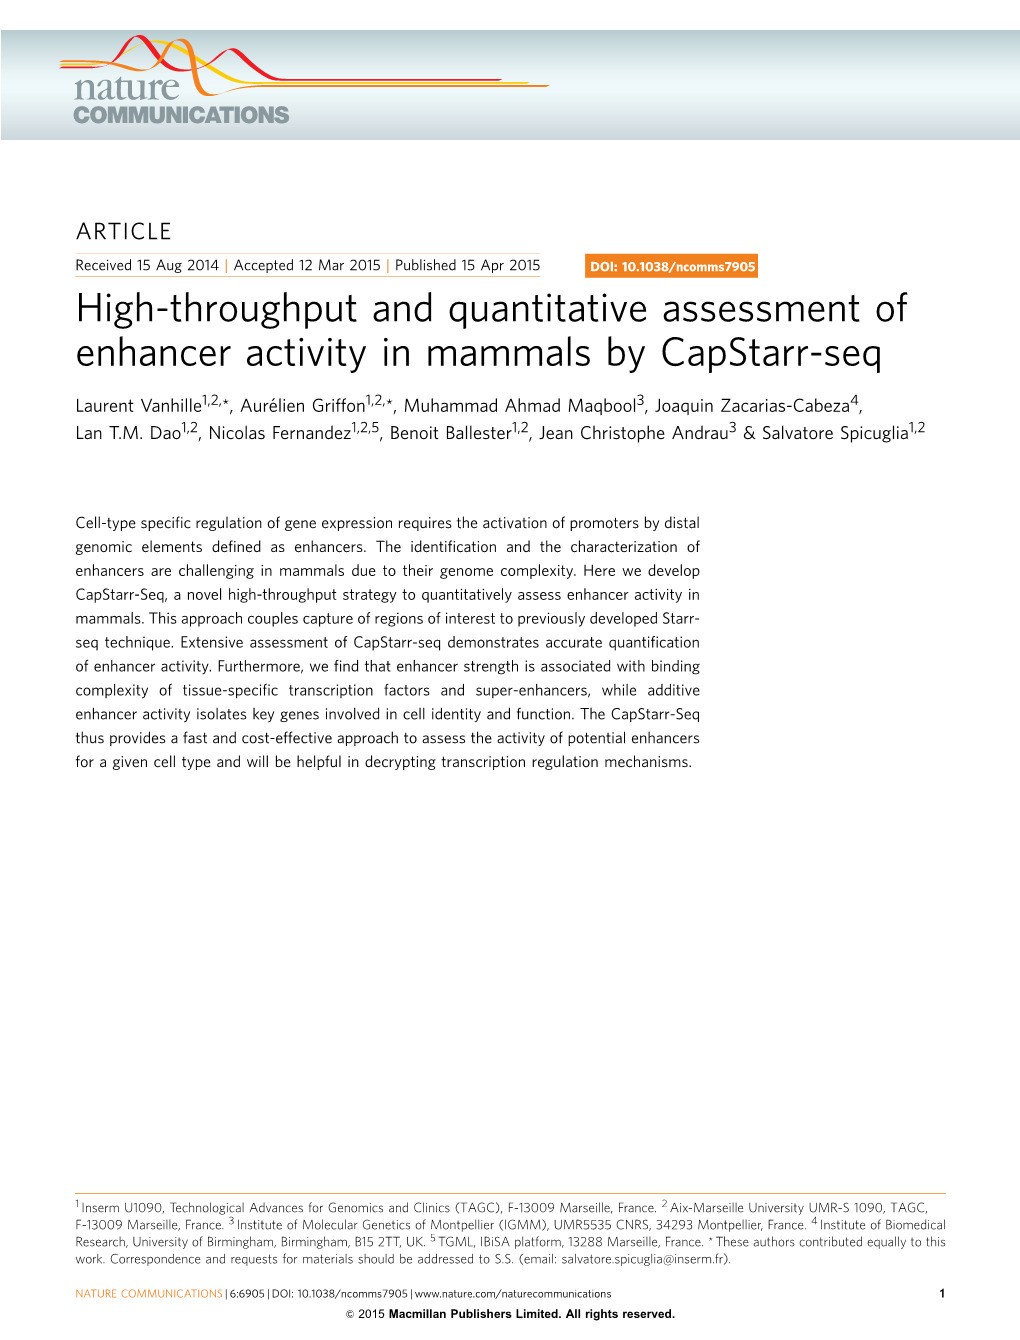 High-Throughput and Quantitative Assessment of Enhancer Activity in Mammals by Capstarr-Seq